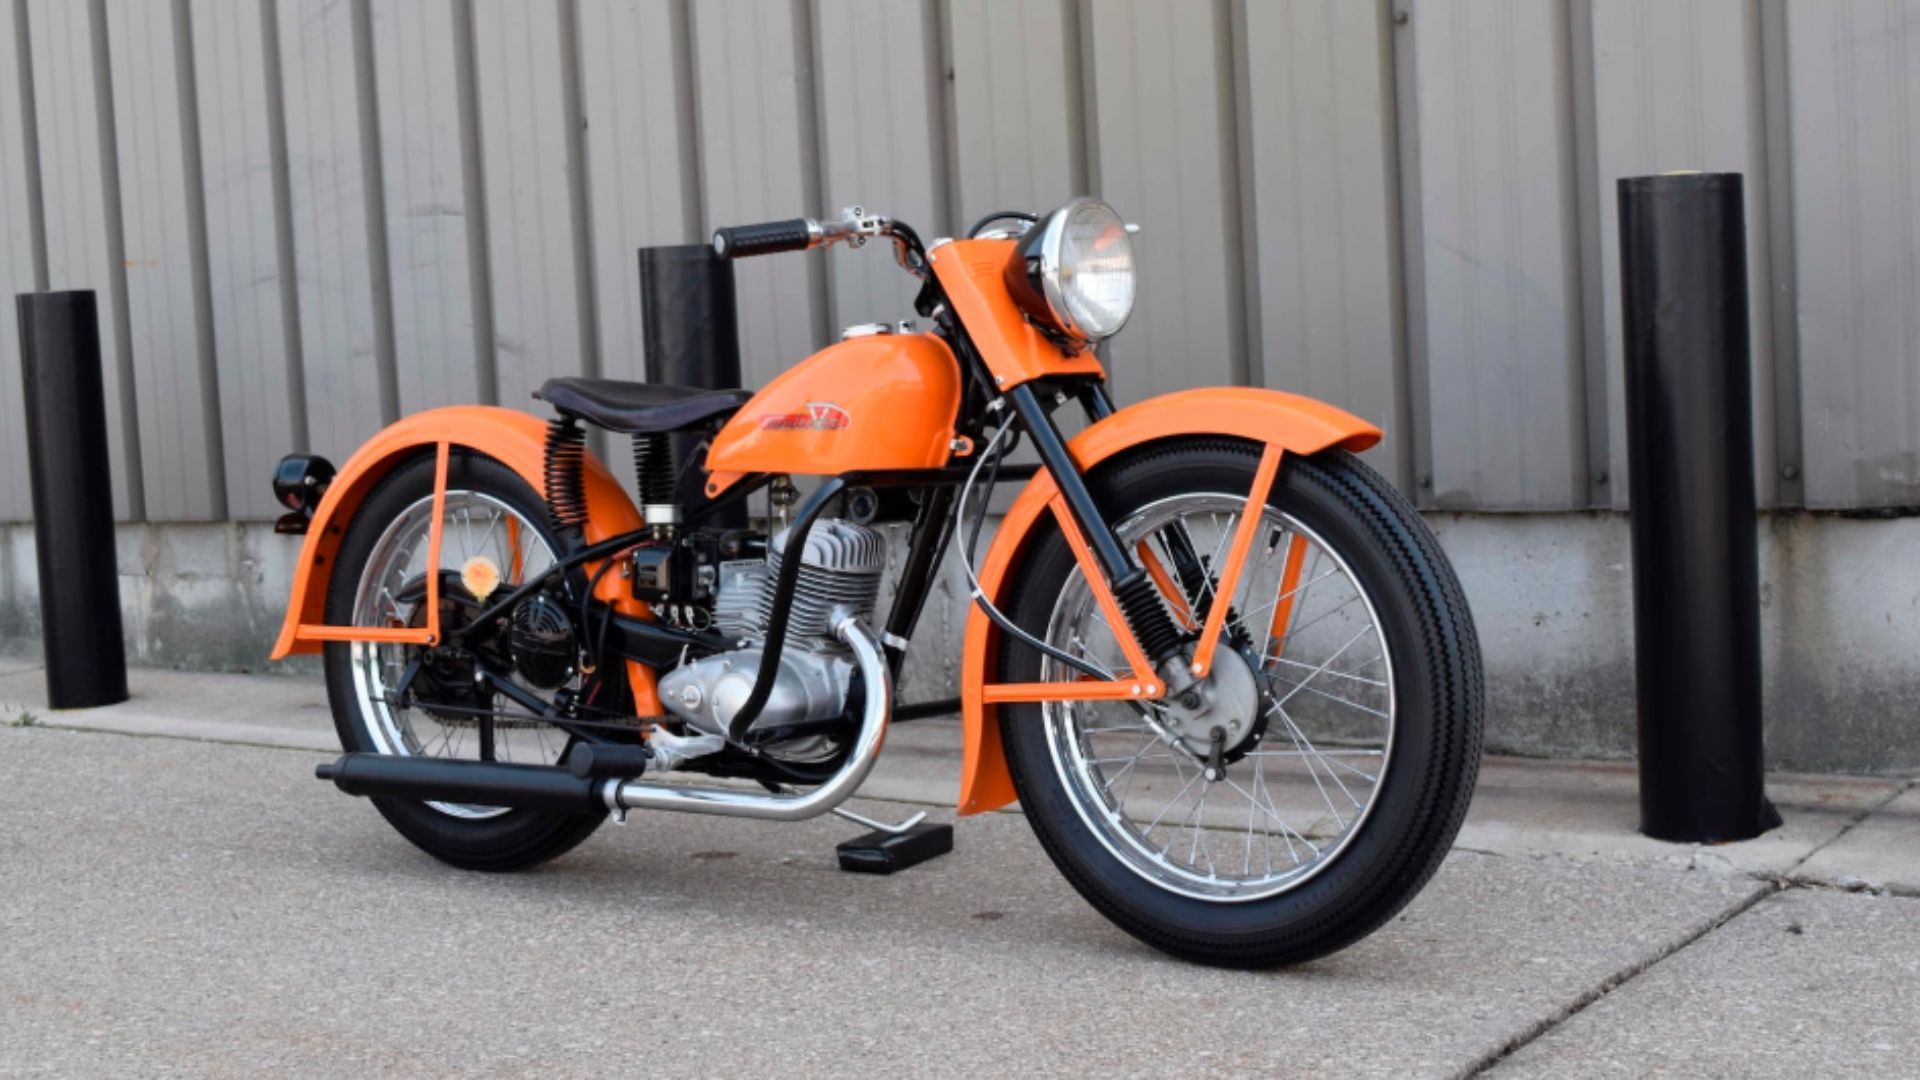 Motorcycle Monday: 1956 Harley-Davidson Hummer Motorcycle 